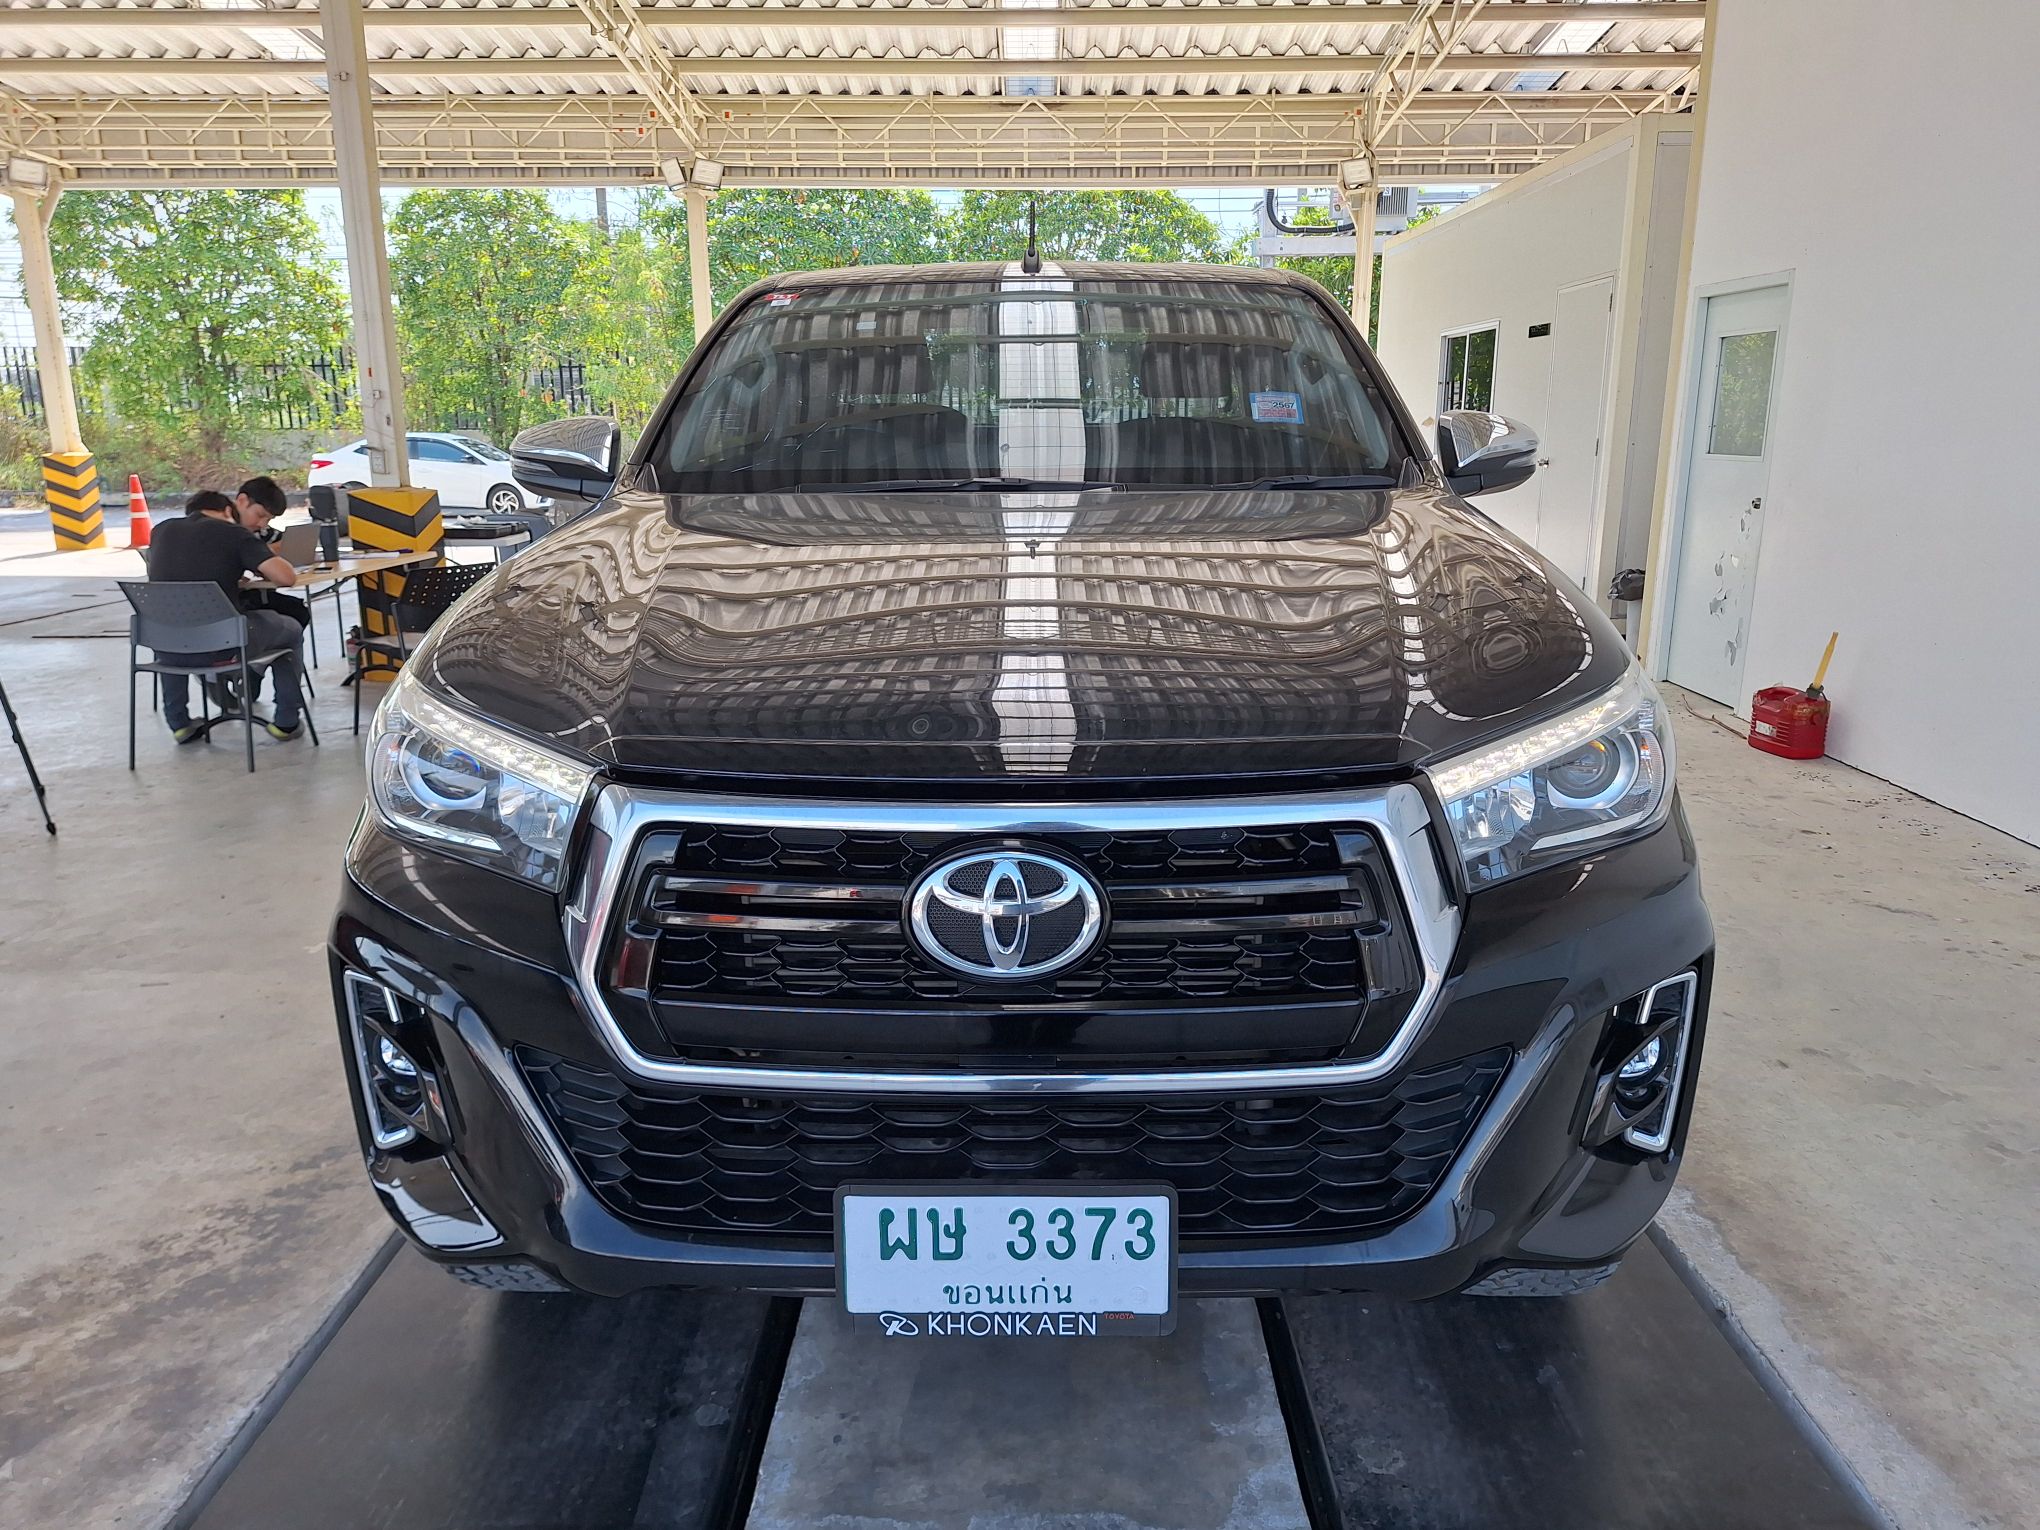 2019 - Toyota car